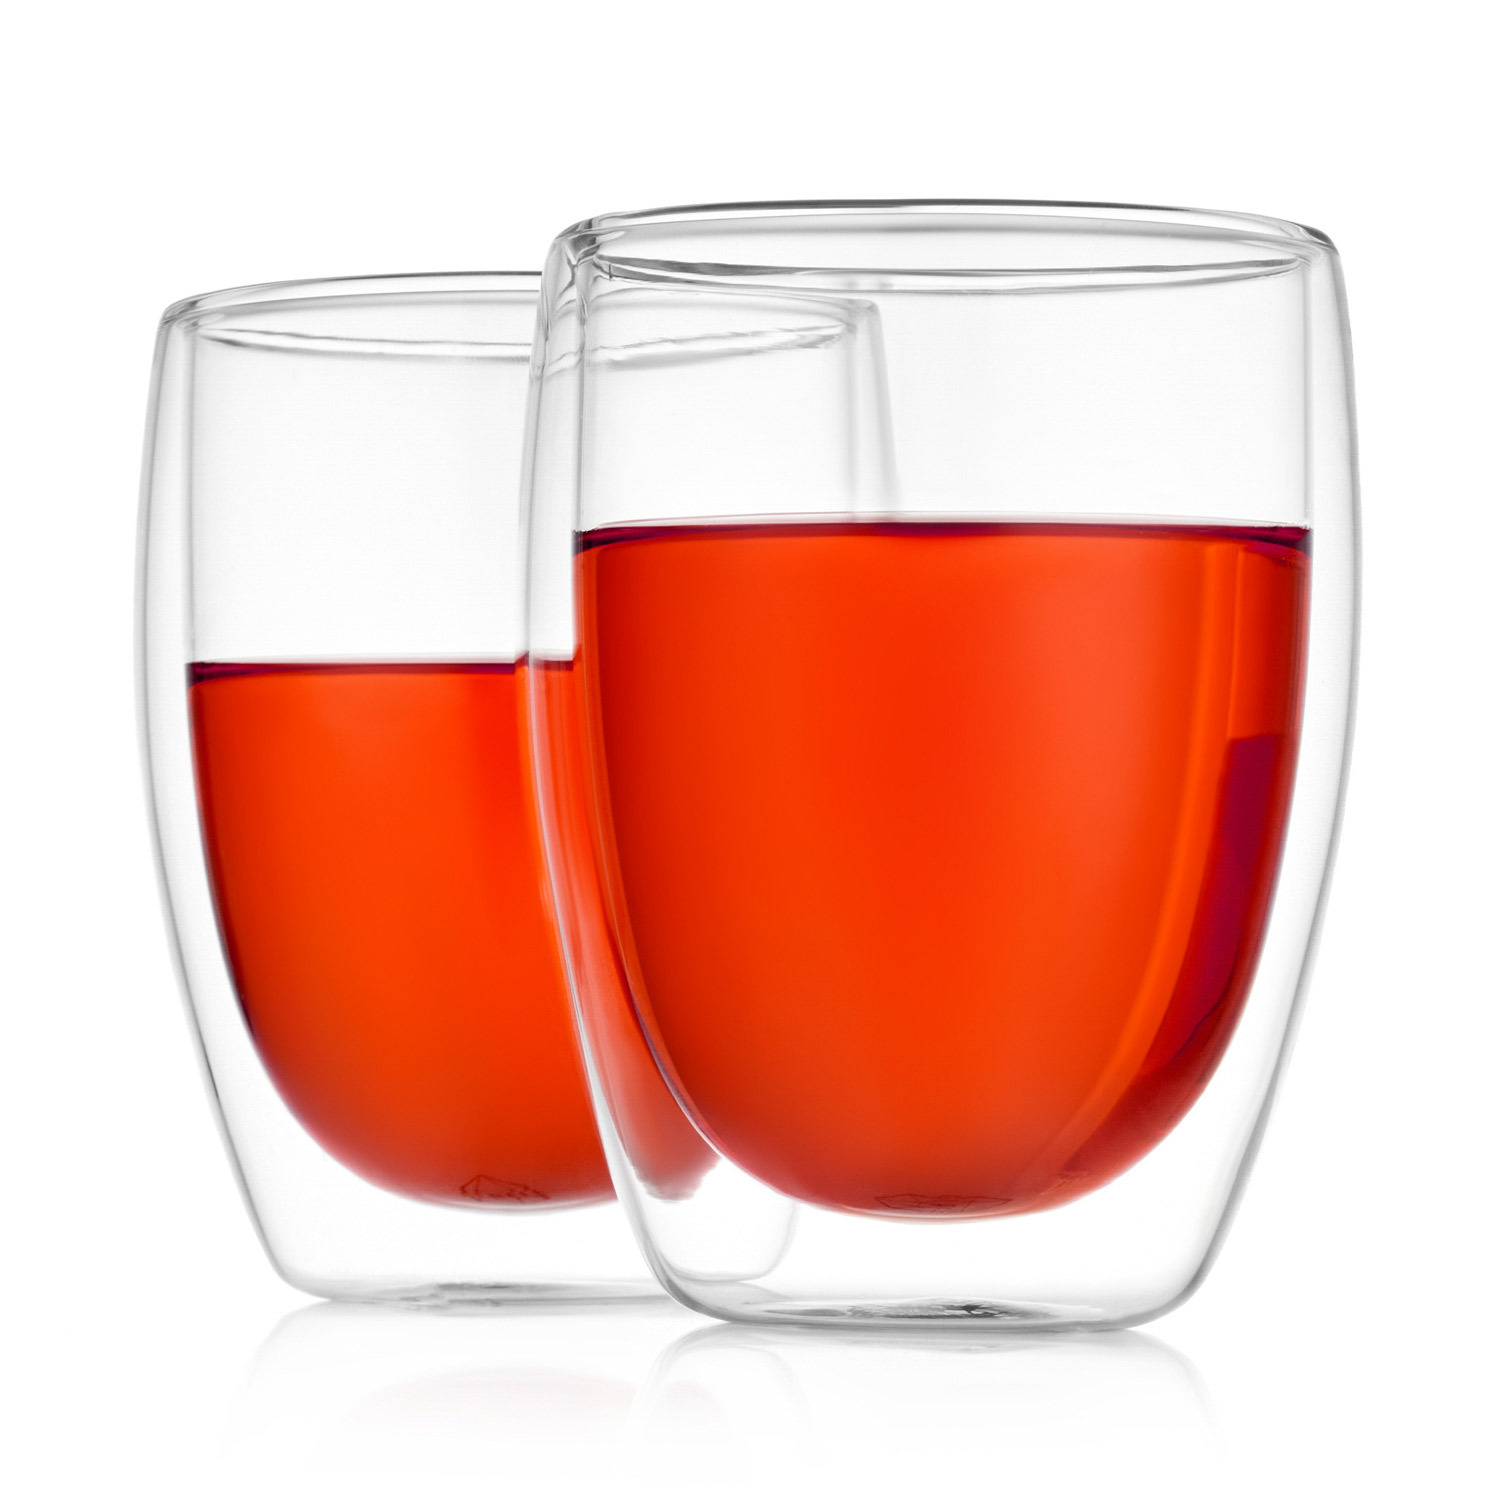  Стеклянный стакан с двойными стенками "Ландыш" 2 штуки, 350 мл TS-11.jpg